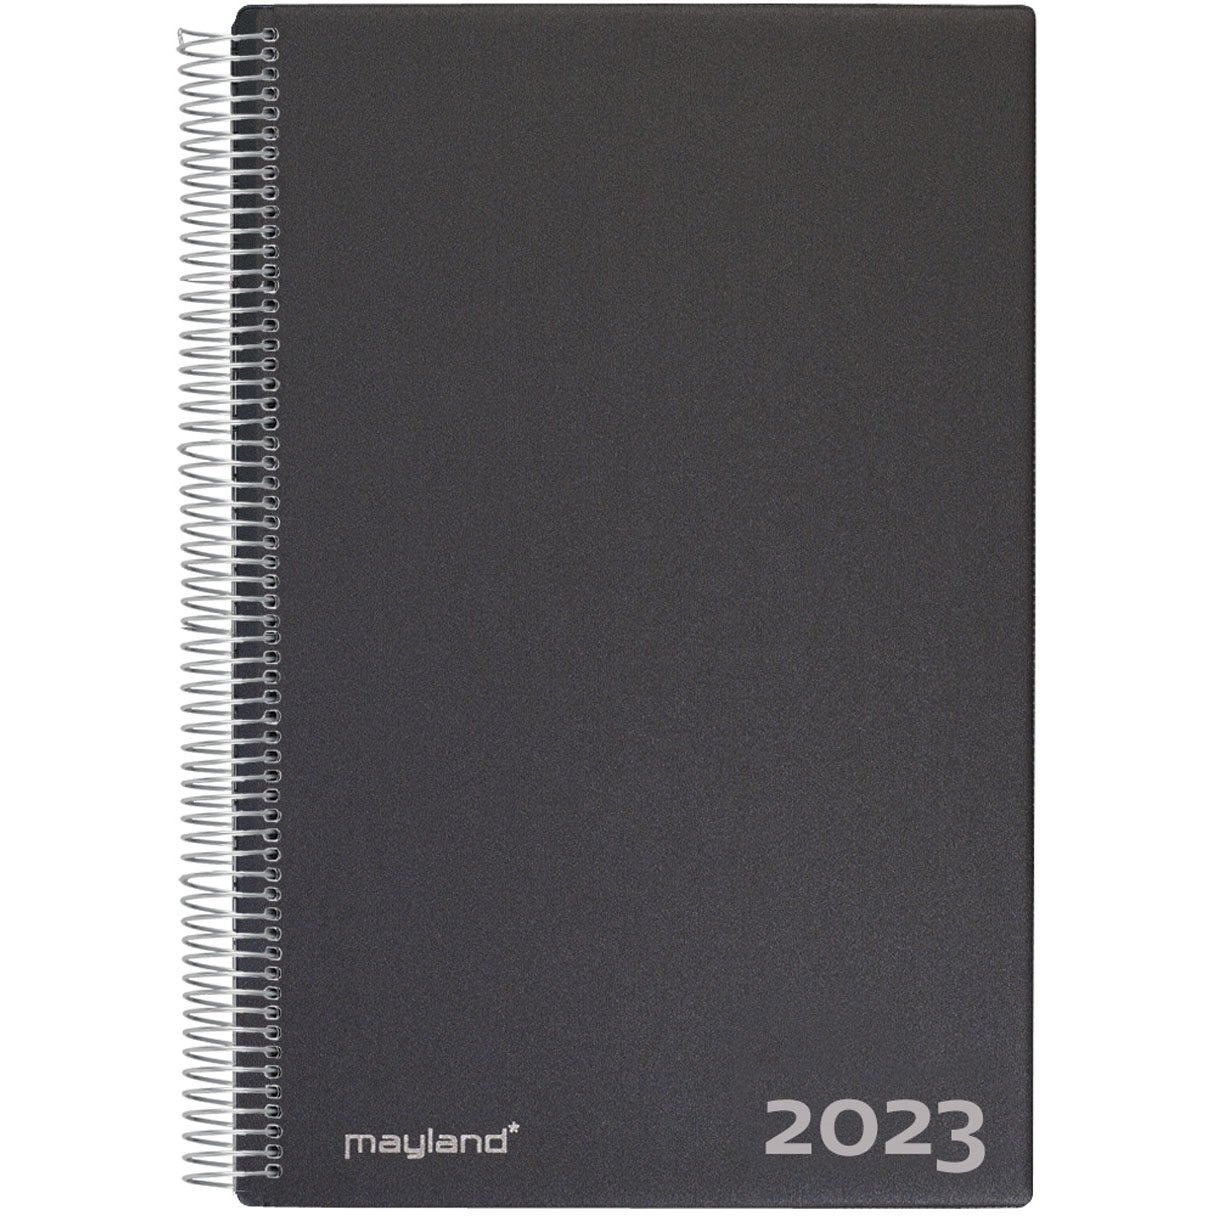 Mayland Aftalekalender 1-dag 2023 sort B23.5 cm x L31.8 cm